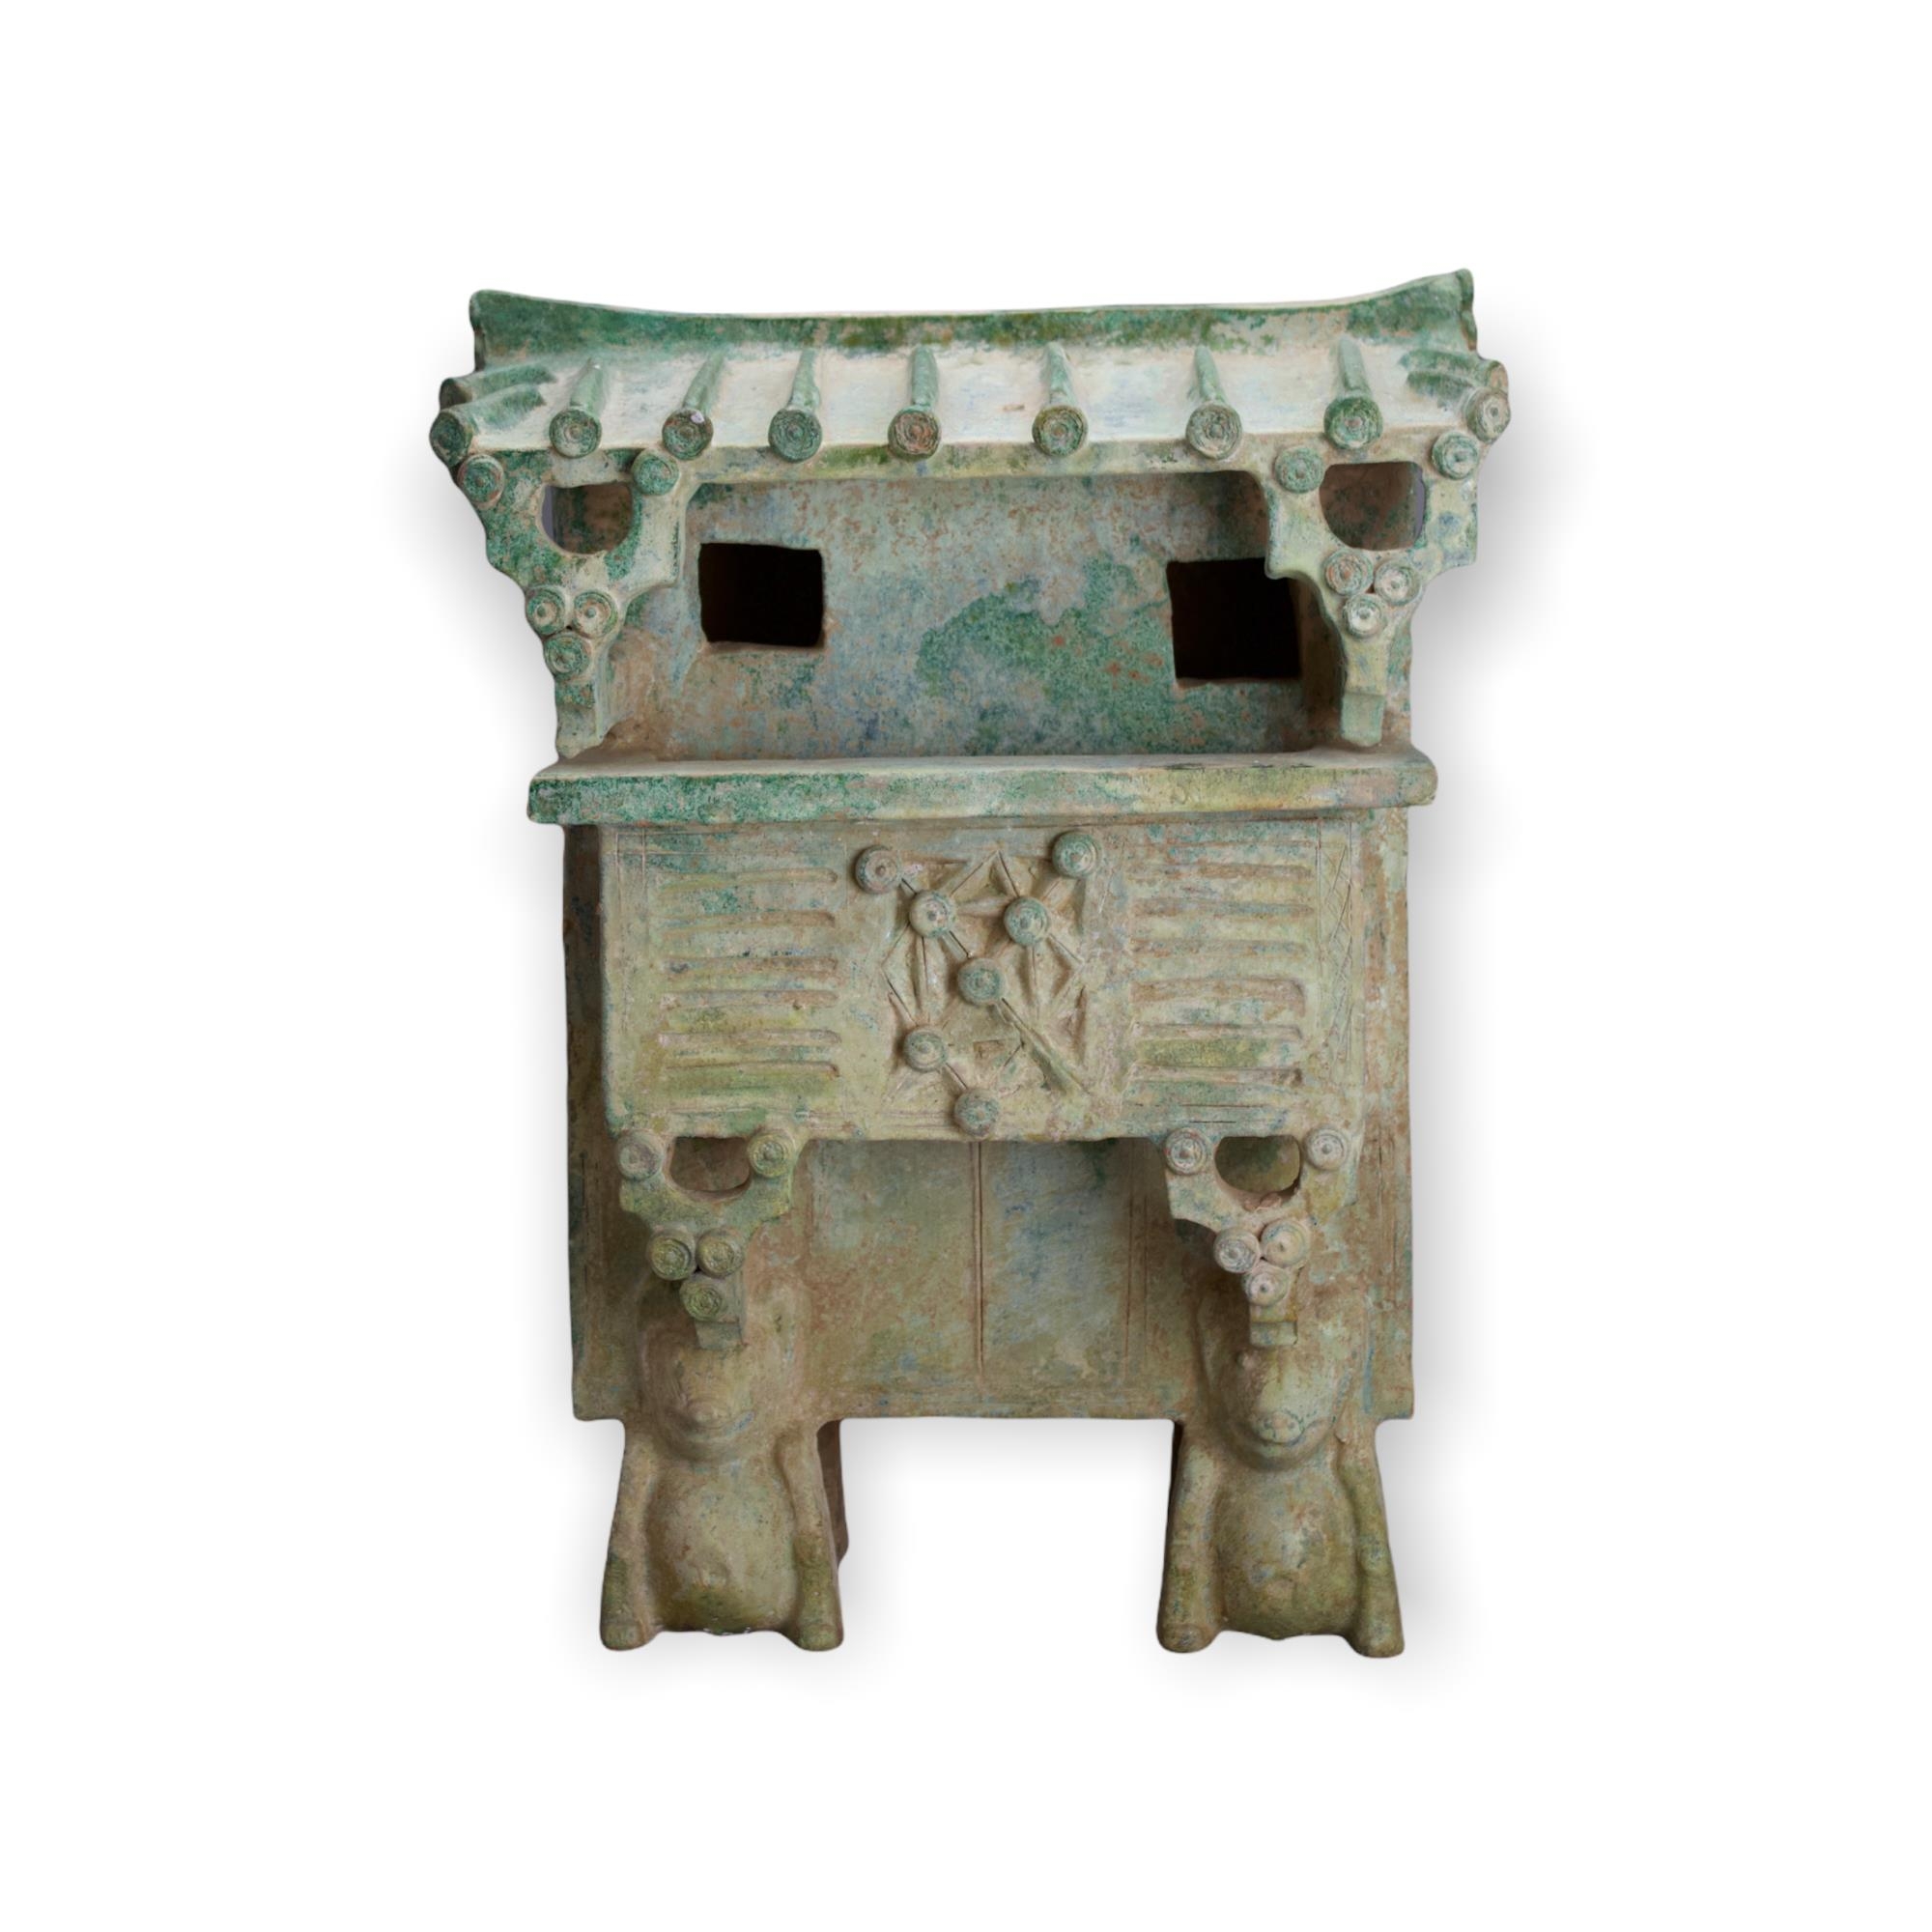 A rare green glazed pottery Watchtower, Han Dynasty - - H 46cm W 34cm D 21.5cm - - raised on four